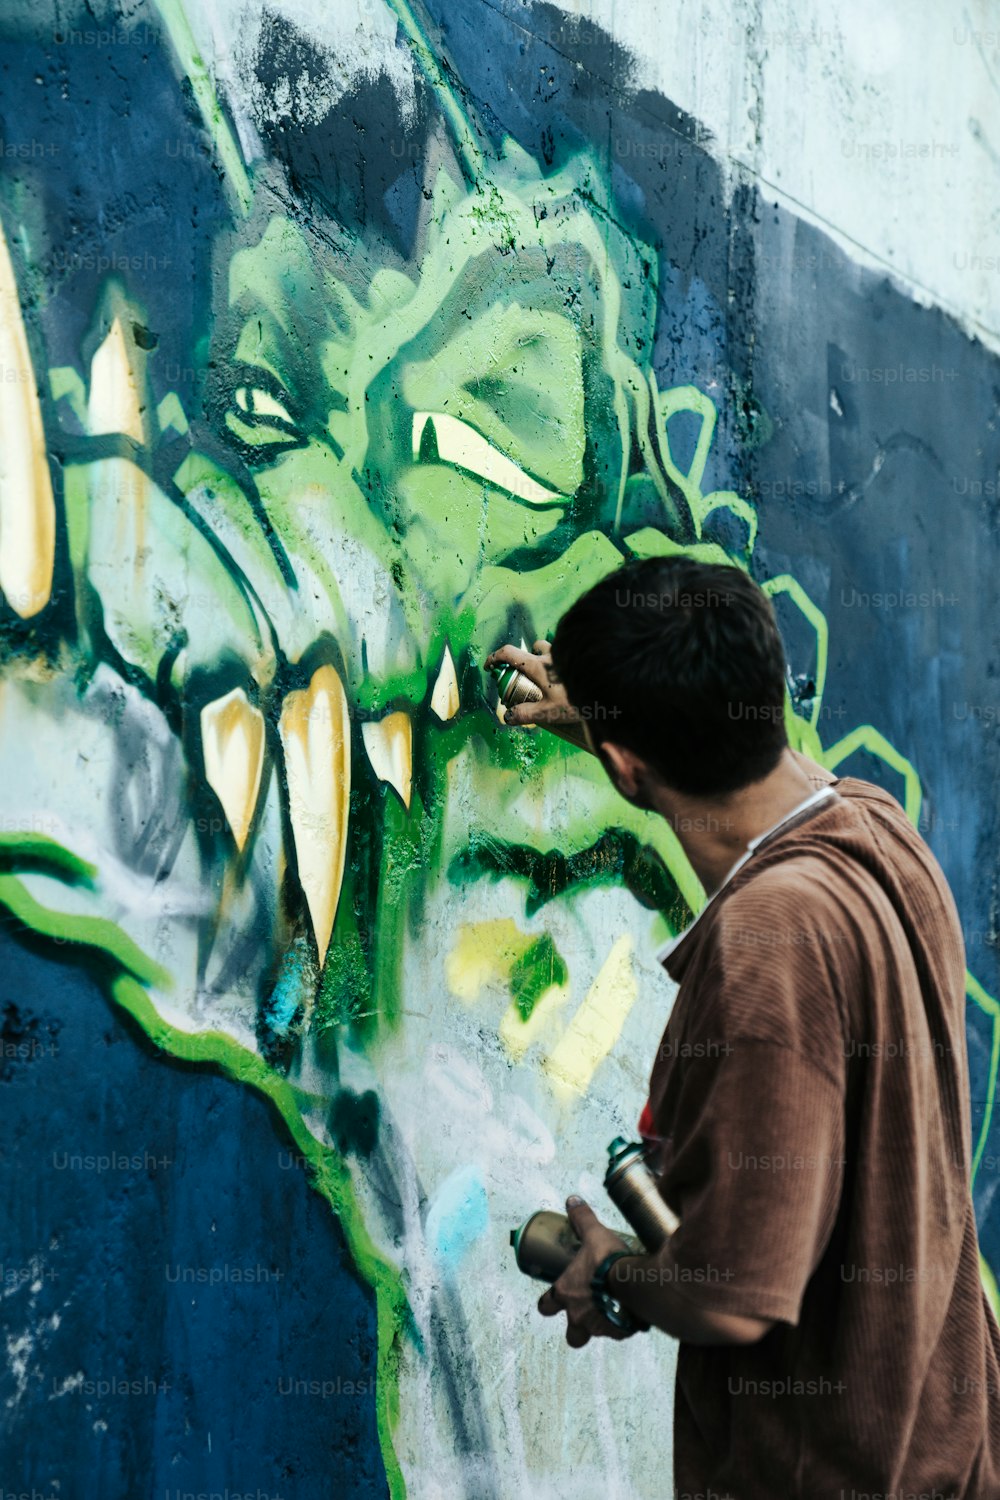 a man painting graffiti on a wall